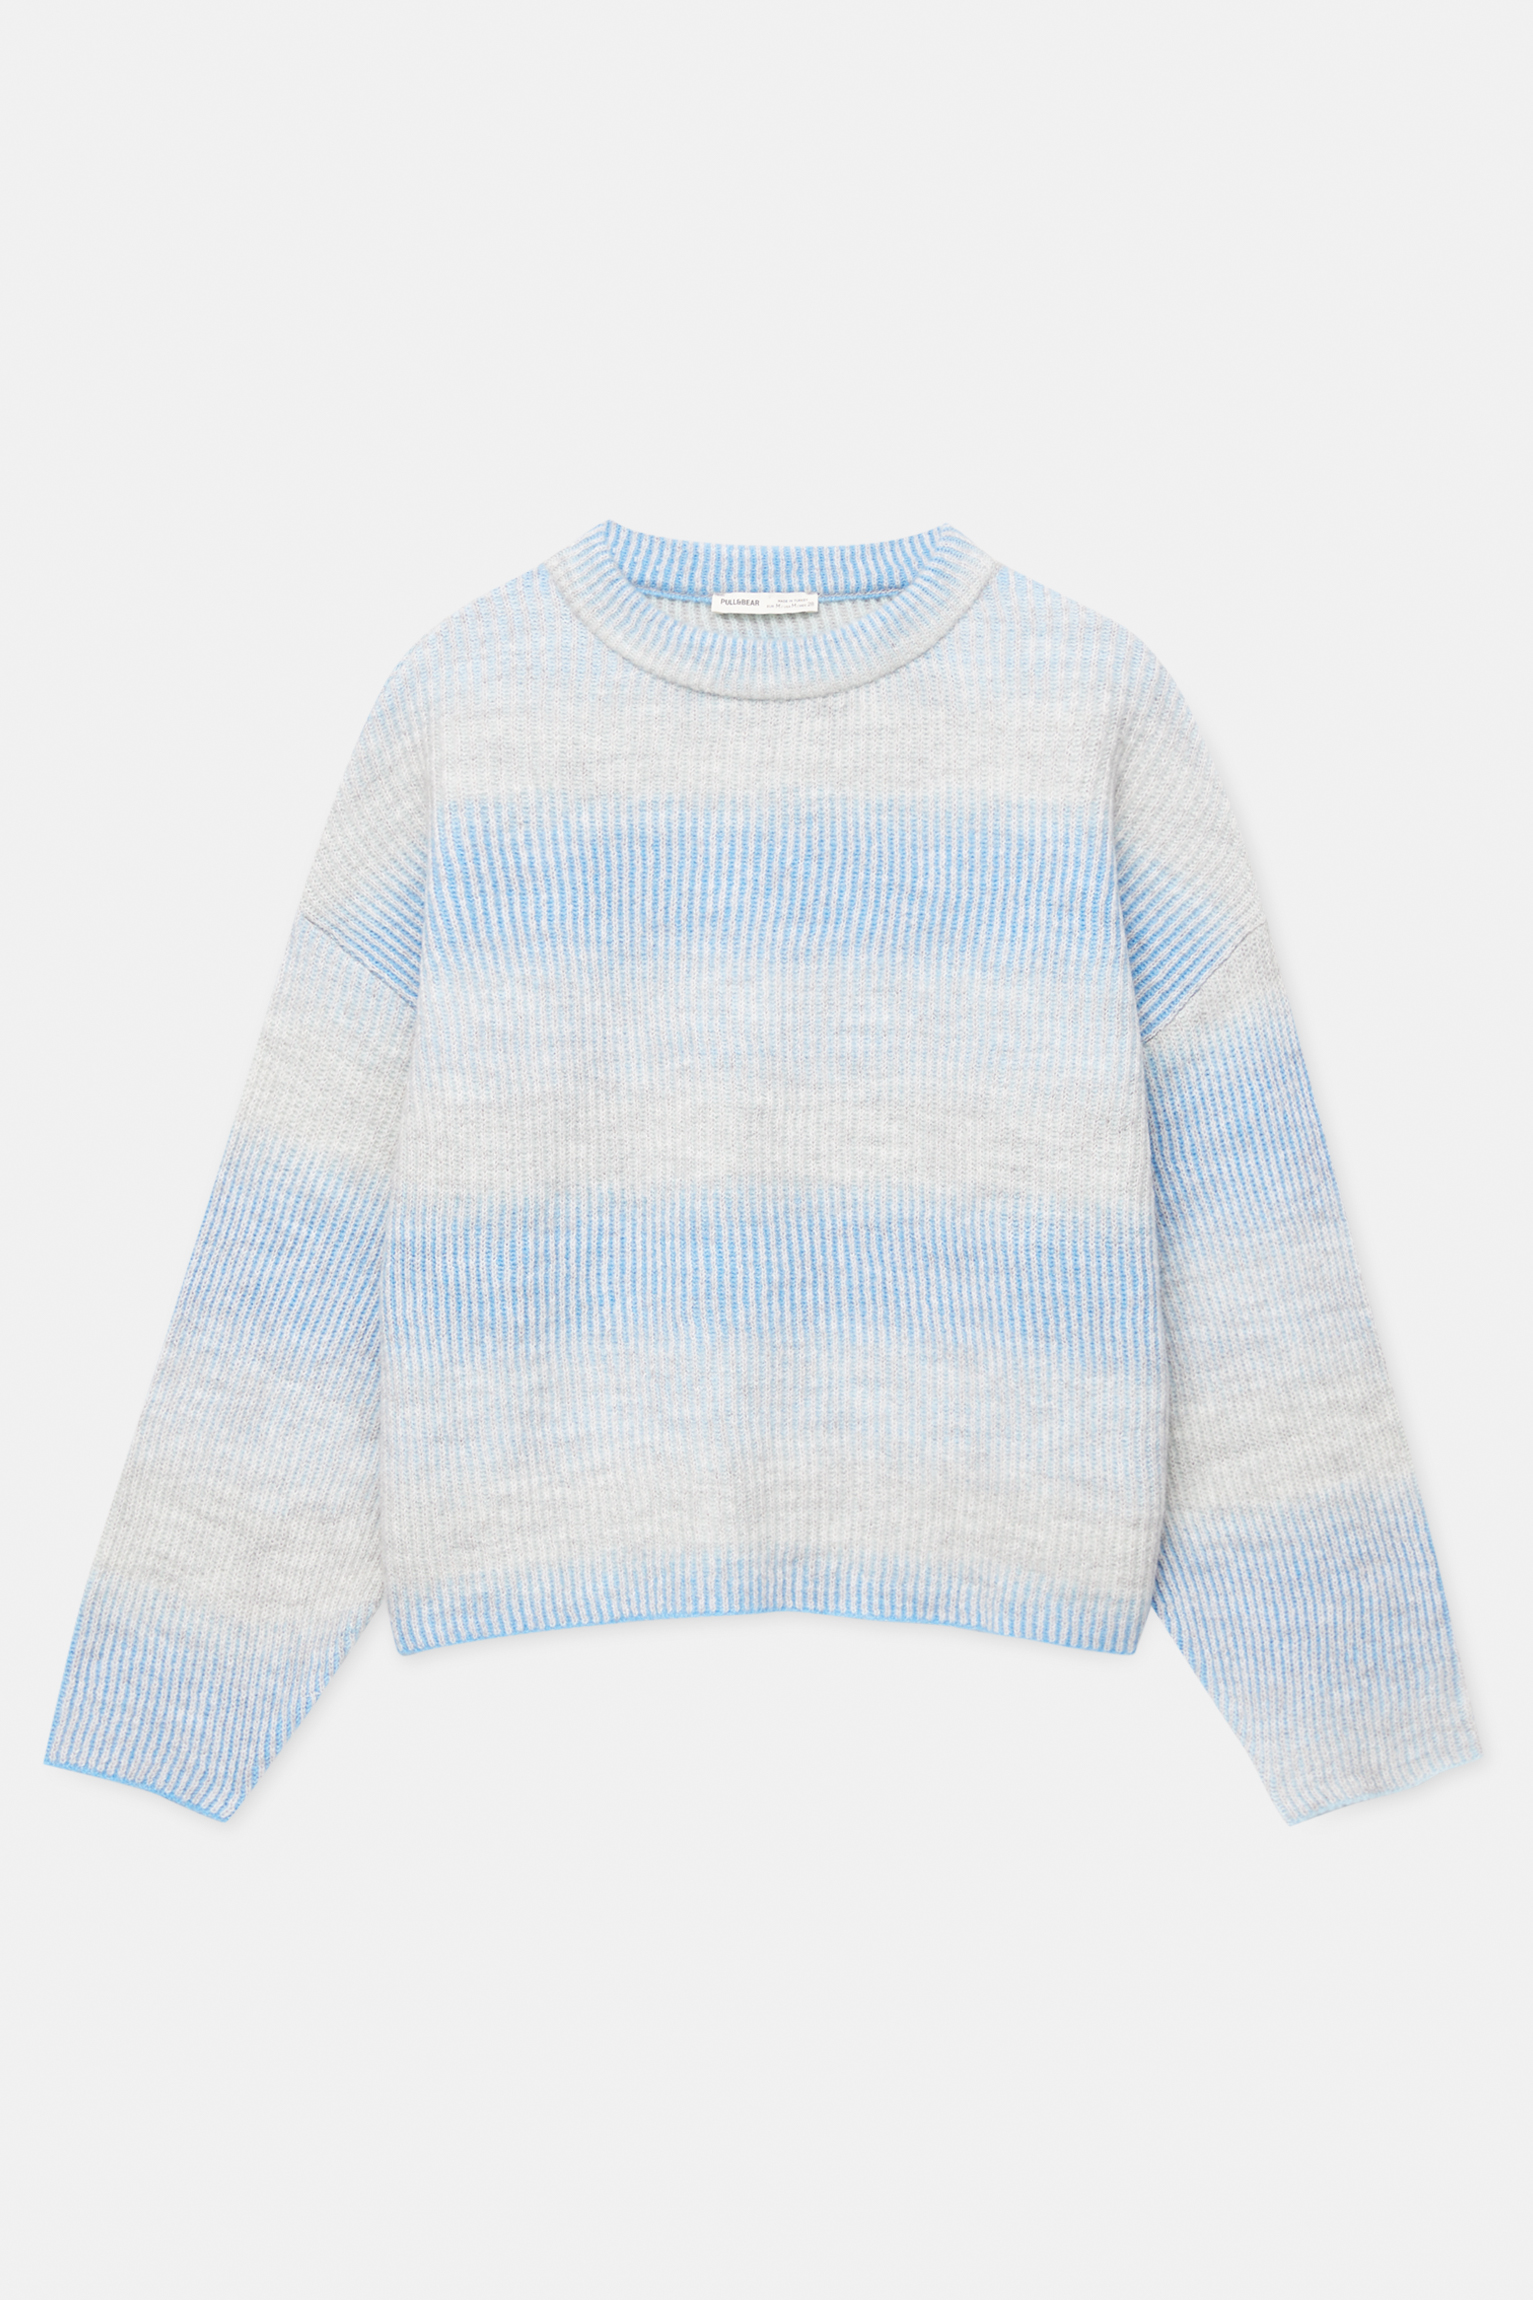 Ombré knit sweater